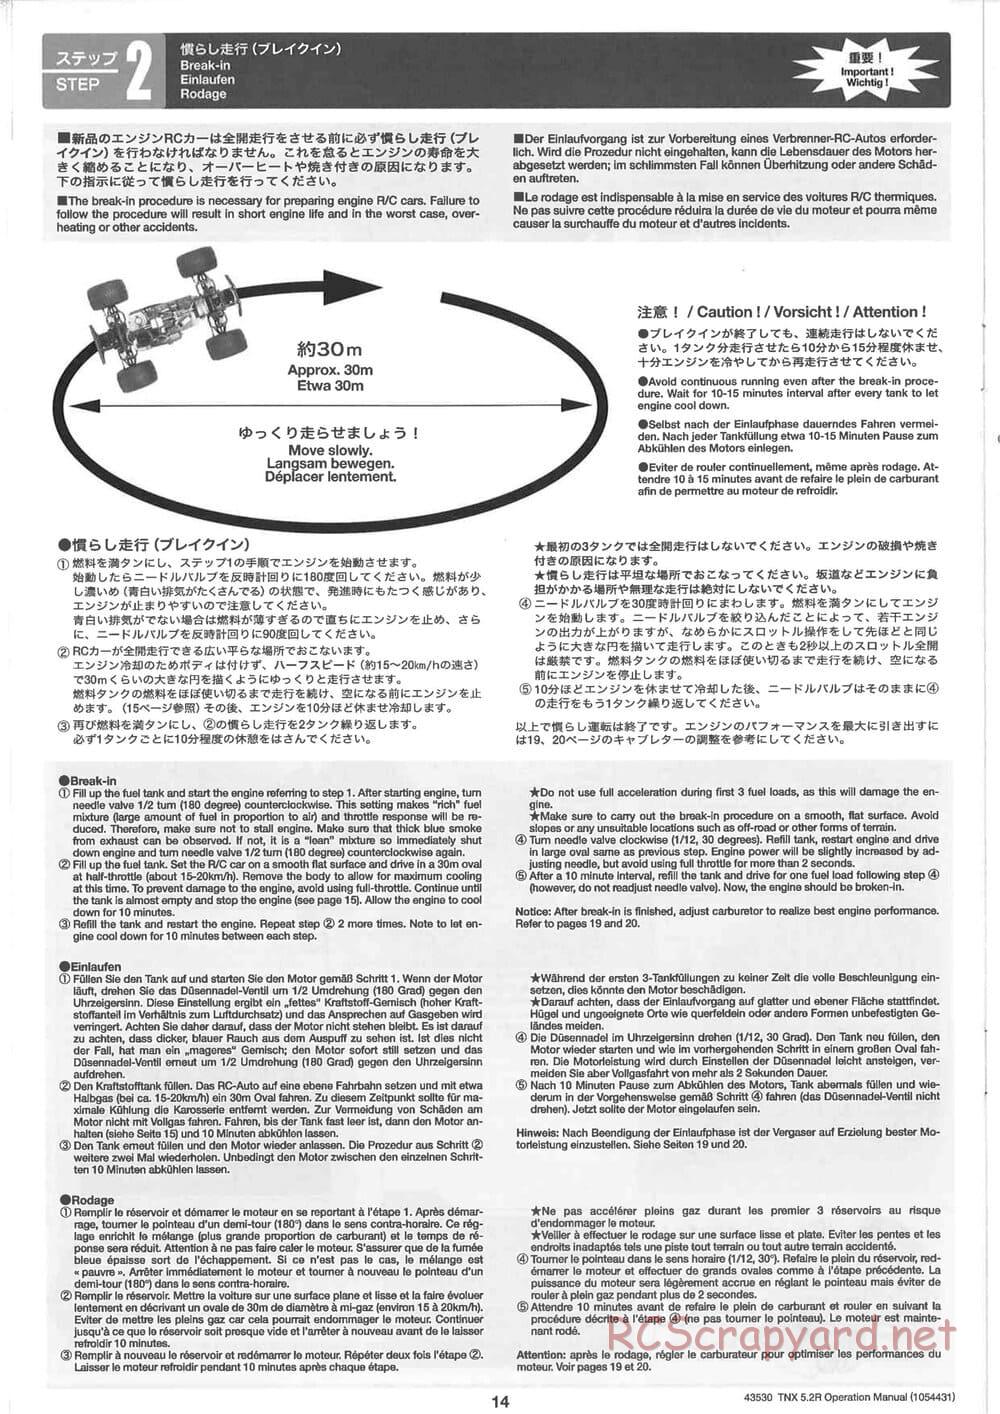 Tamiya - TNX 5.2R - TGM-04 - Operating Manual - Page 14